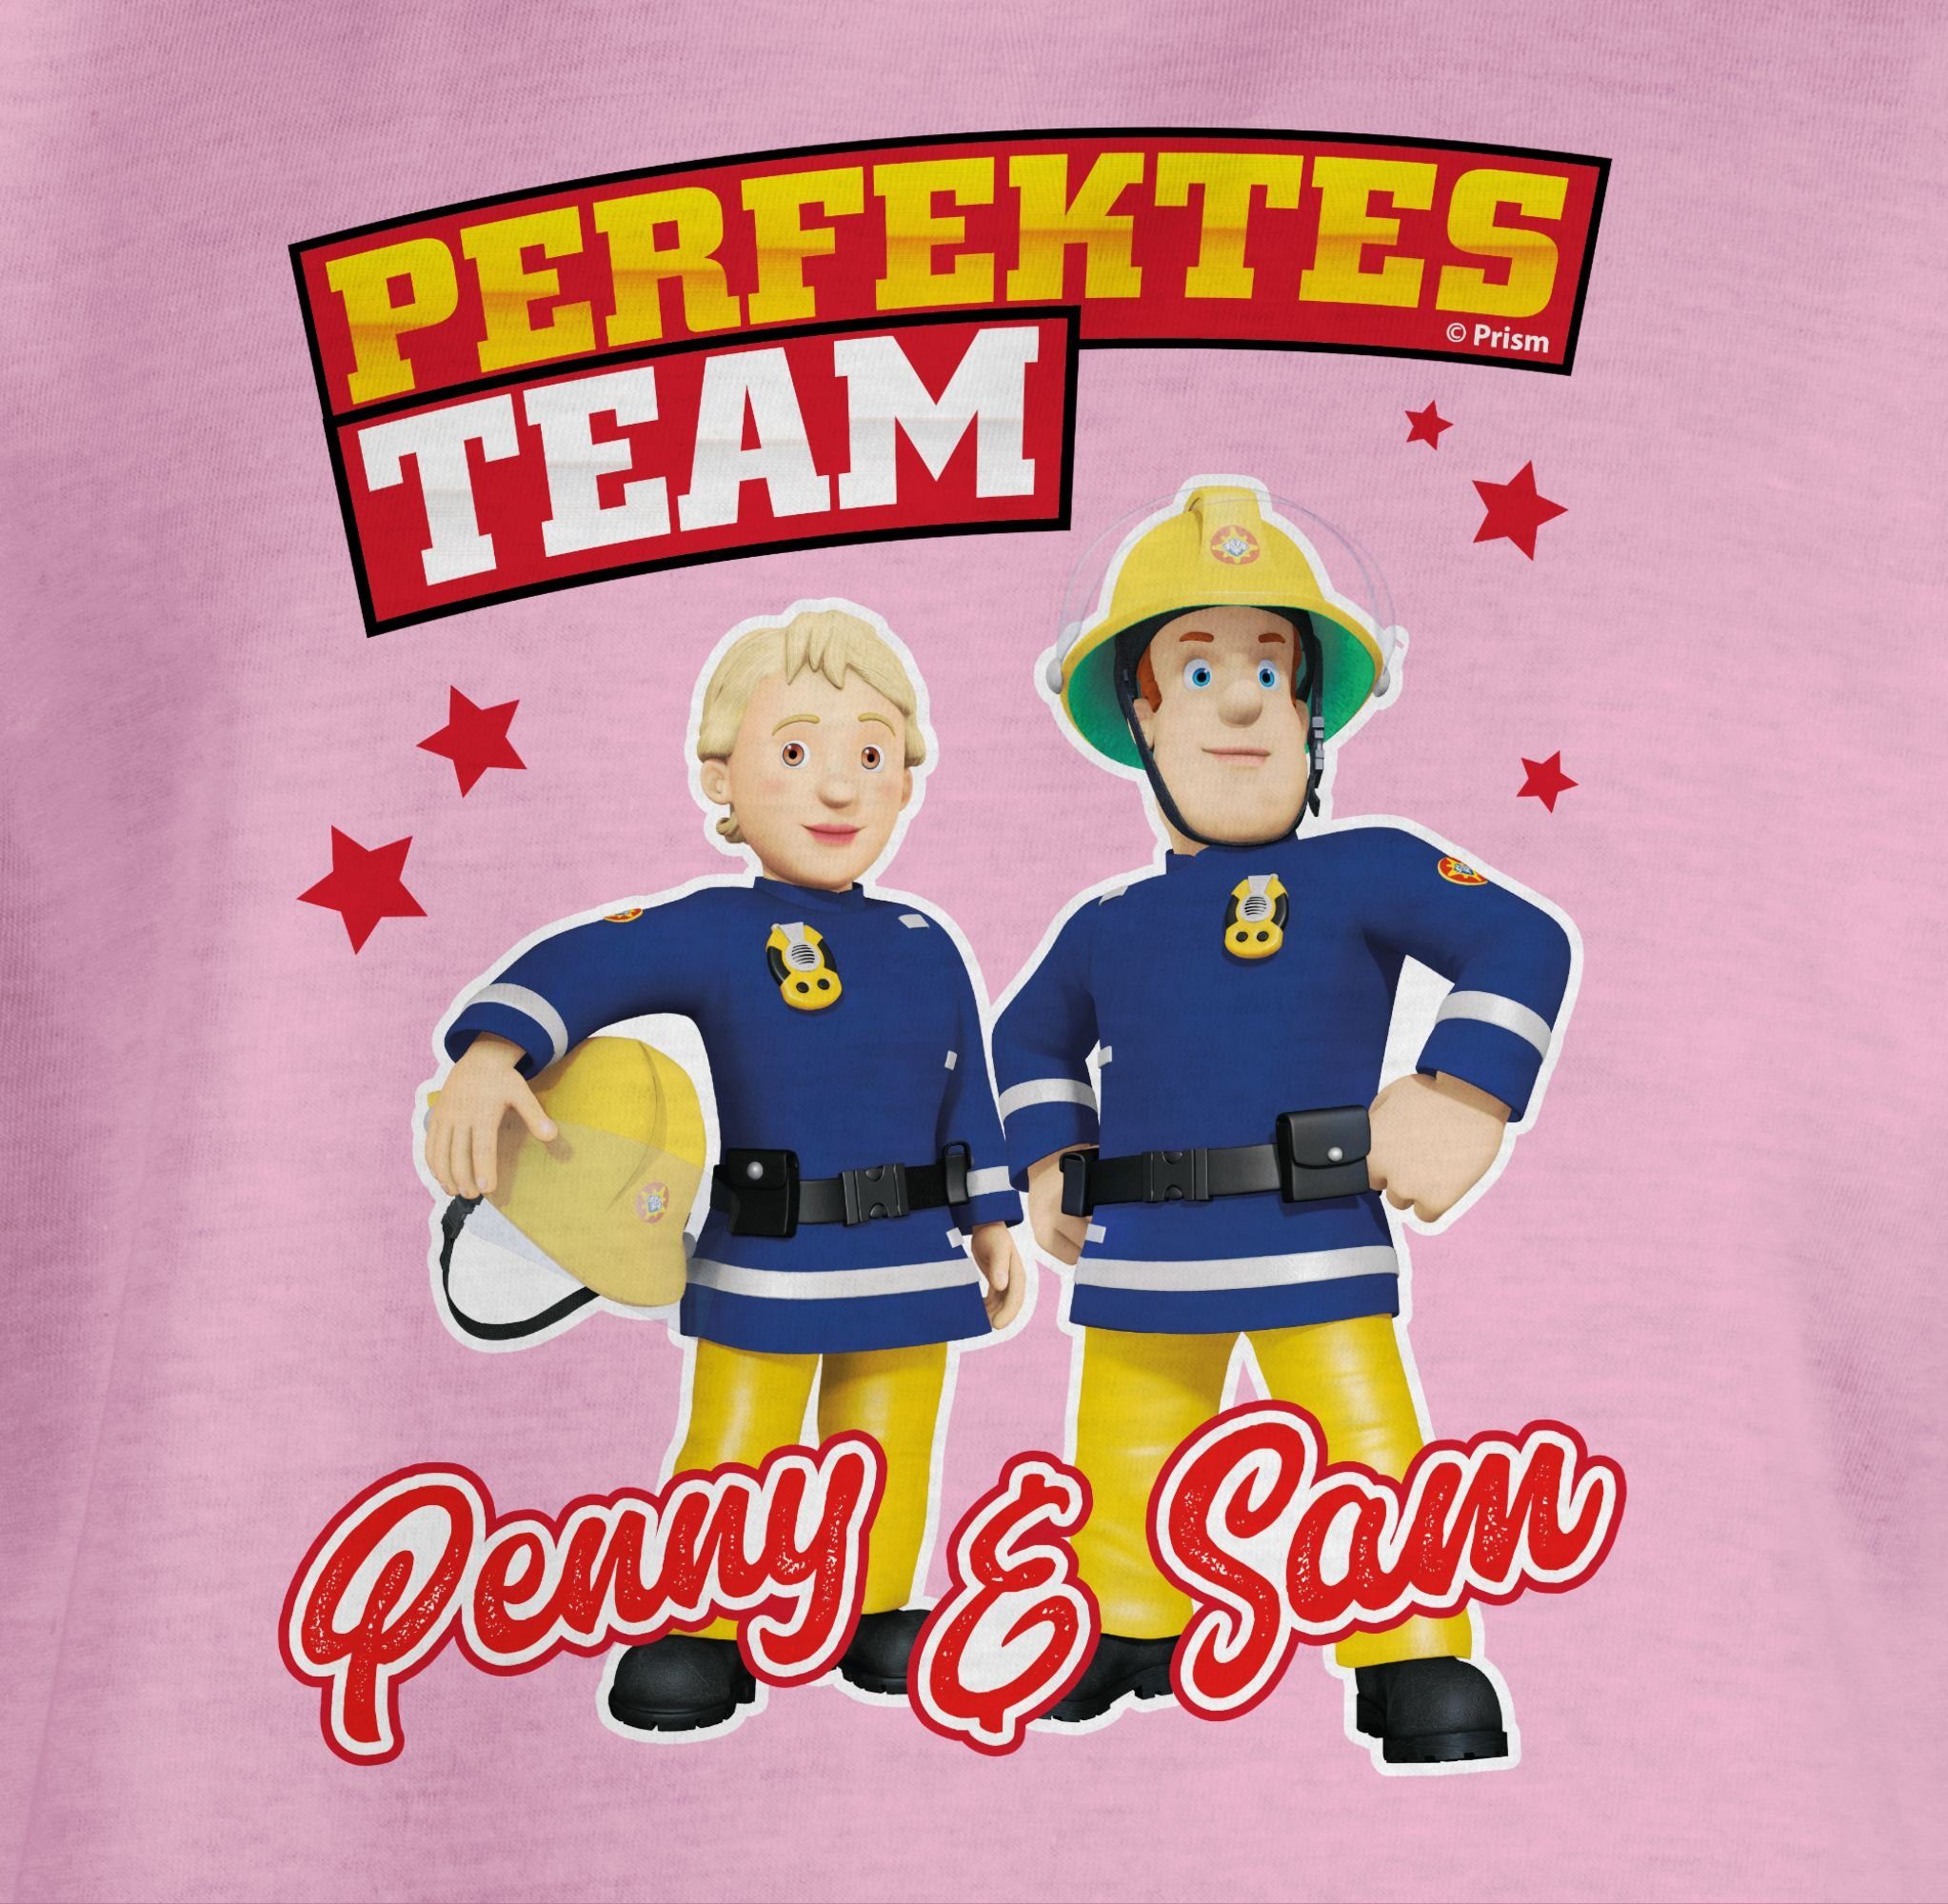 Penny Feuerwehrmann T-Shirt Shirtracer 2 Sam - Mädchen Sam & Perfektes Team Rosa